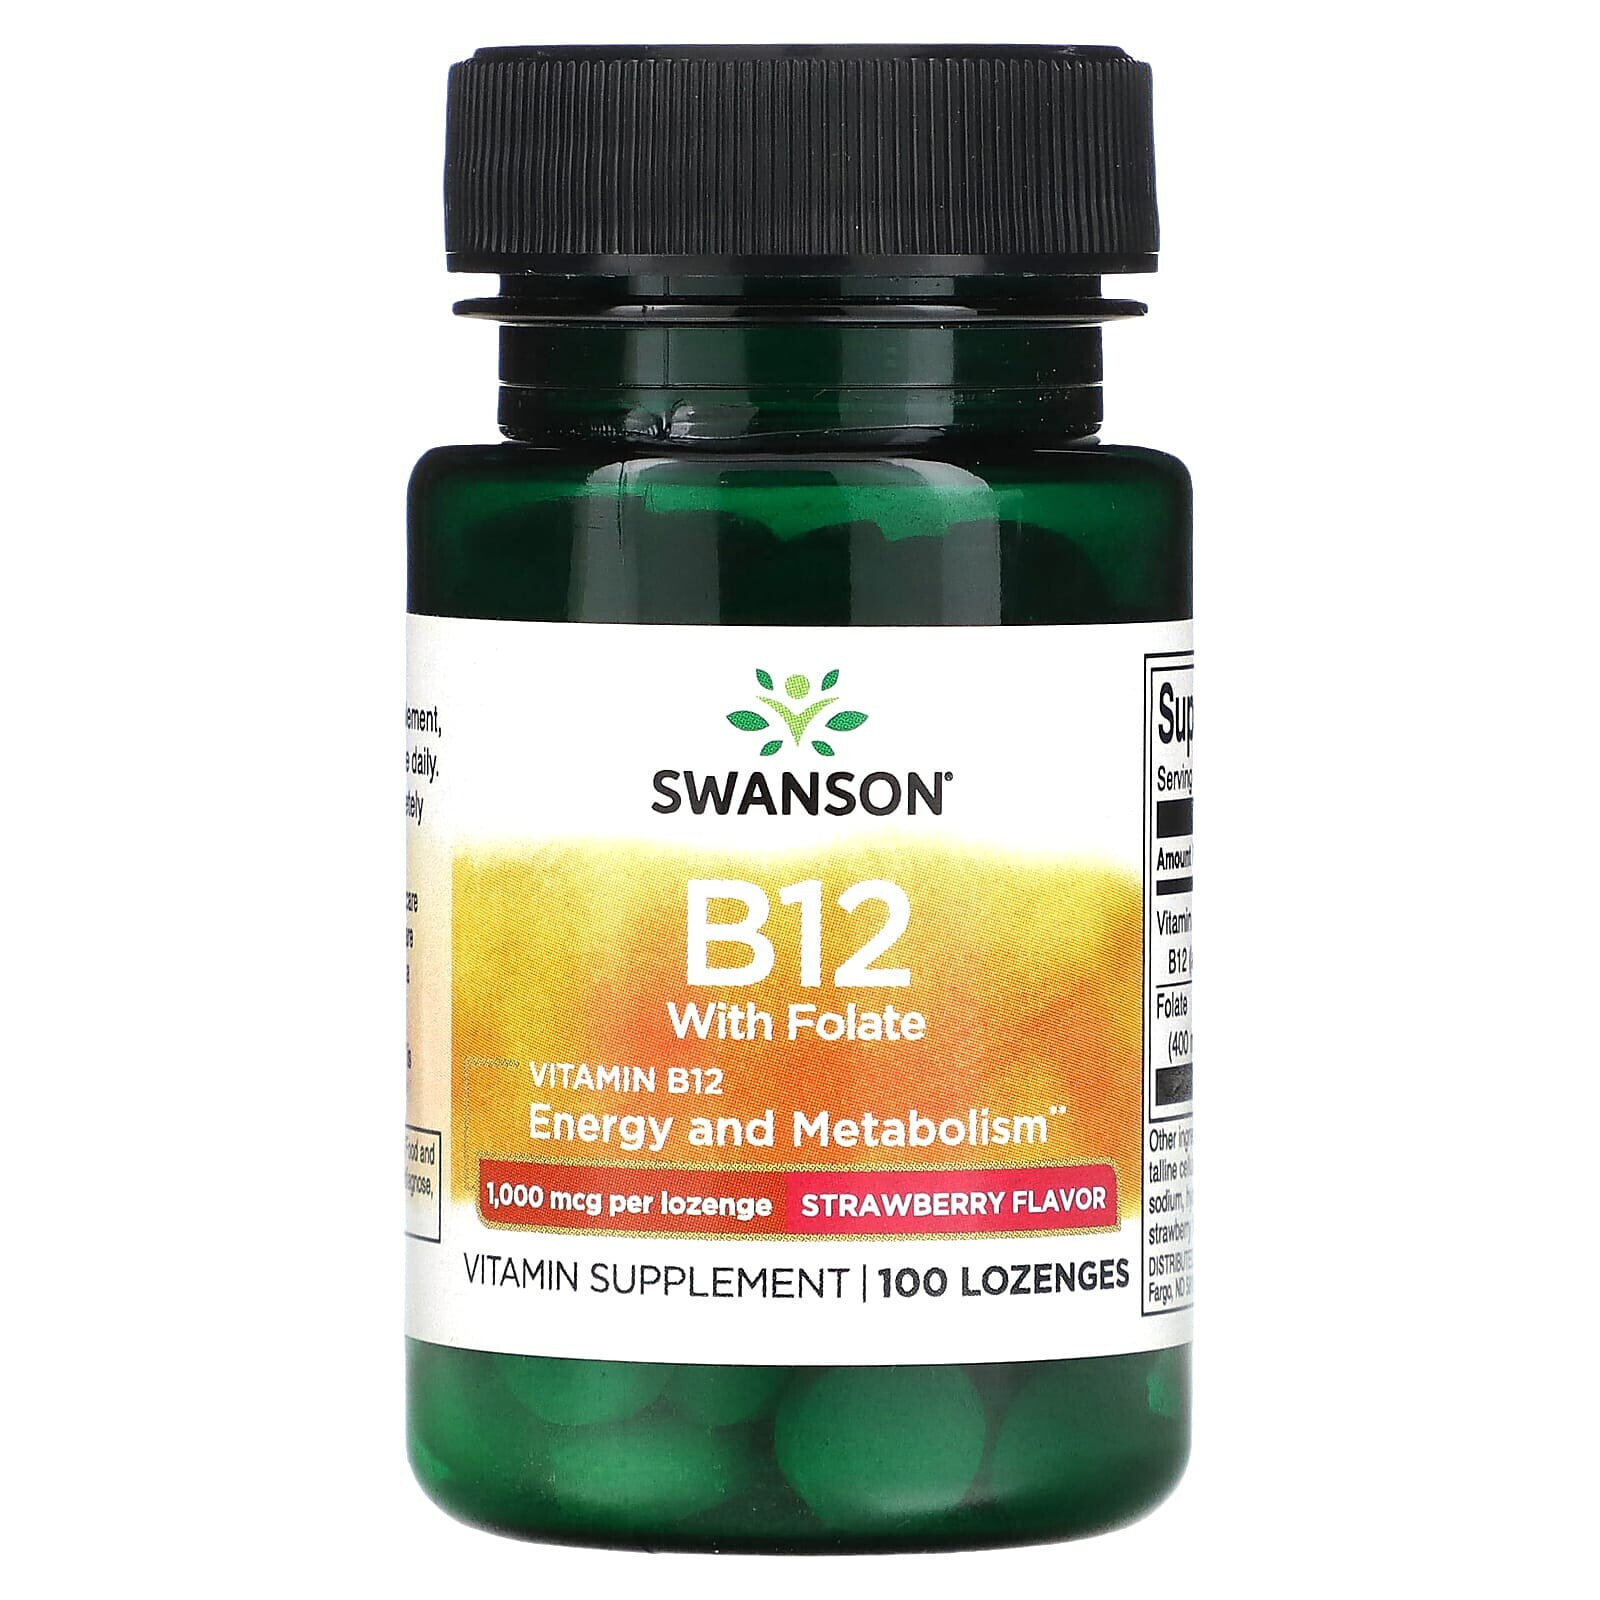 Vitamin B12 with Folate, Strawberry, 1,000 mcg, 100 Lozenges